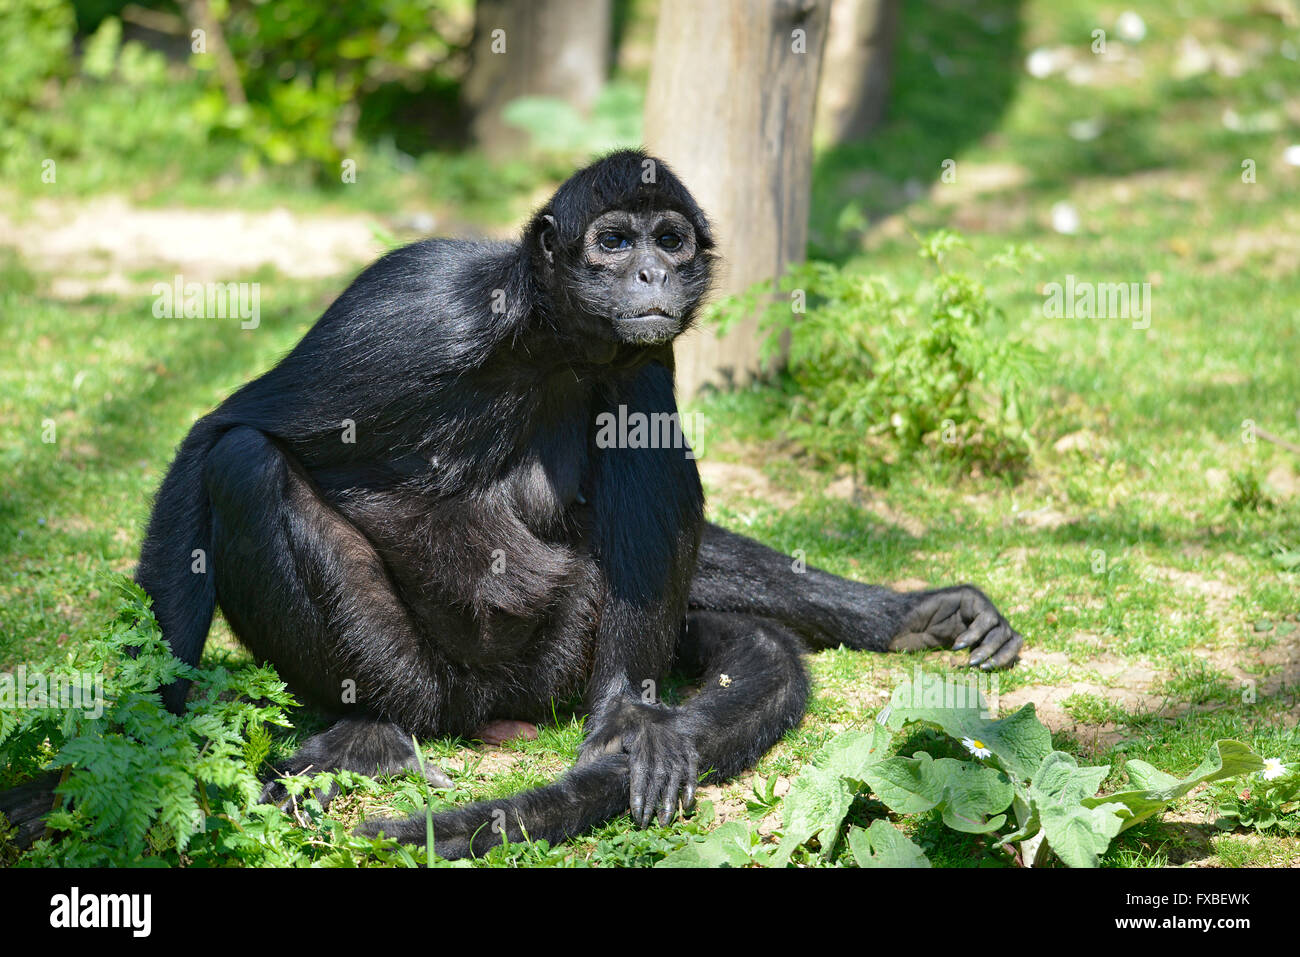 Black-headed spider monkey (Ateles fusciceps) seated on grass Stock Photo